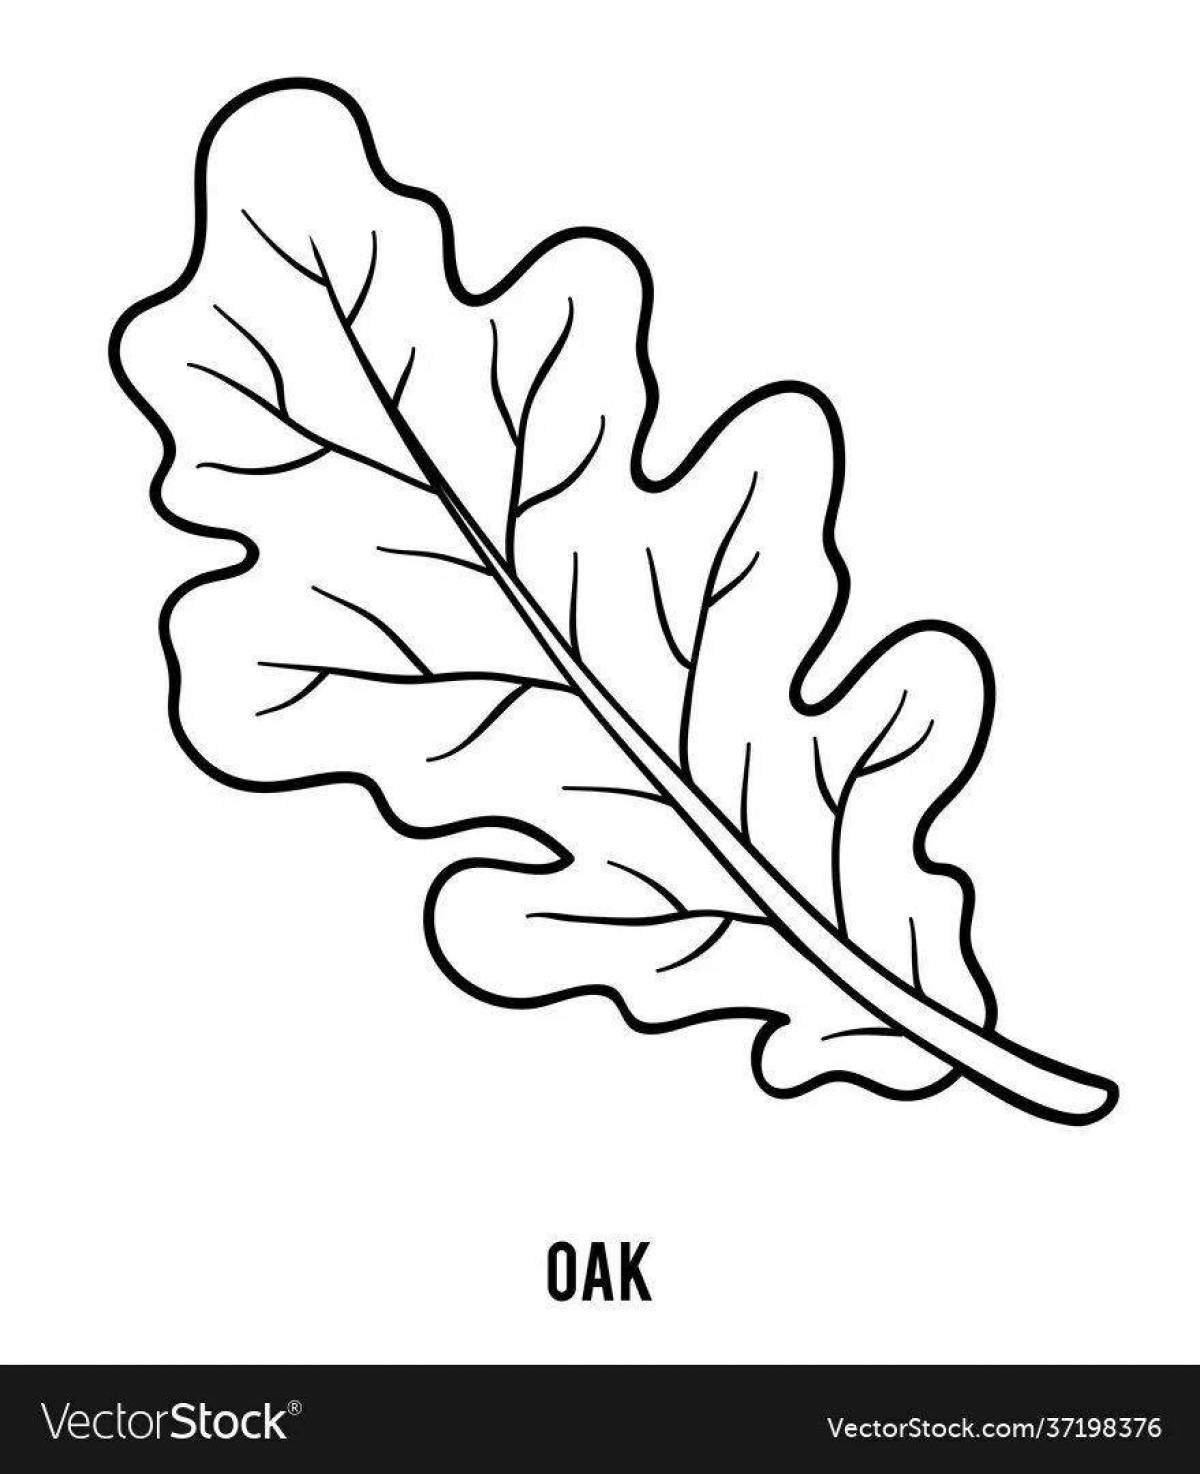 Brilliantly shaded oak leaf coloring book